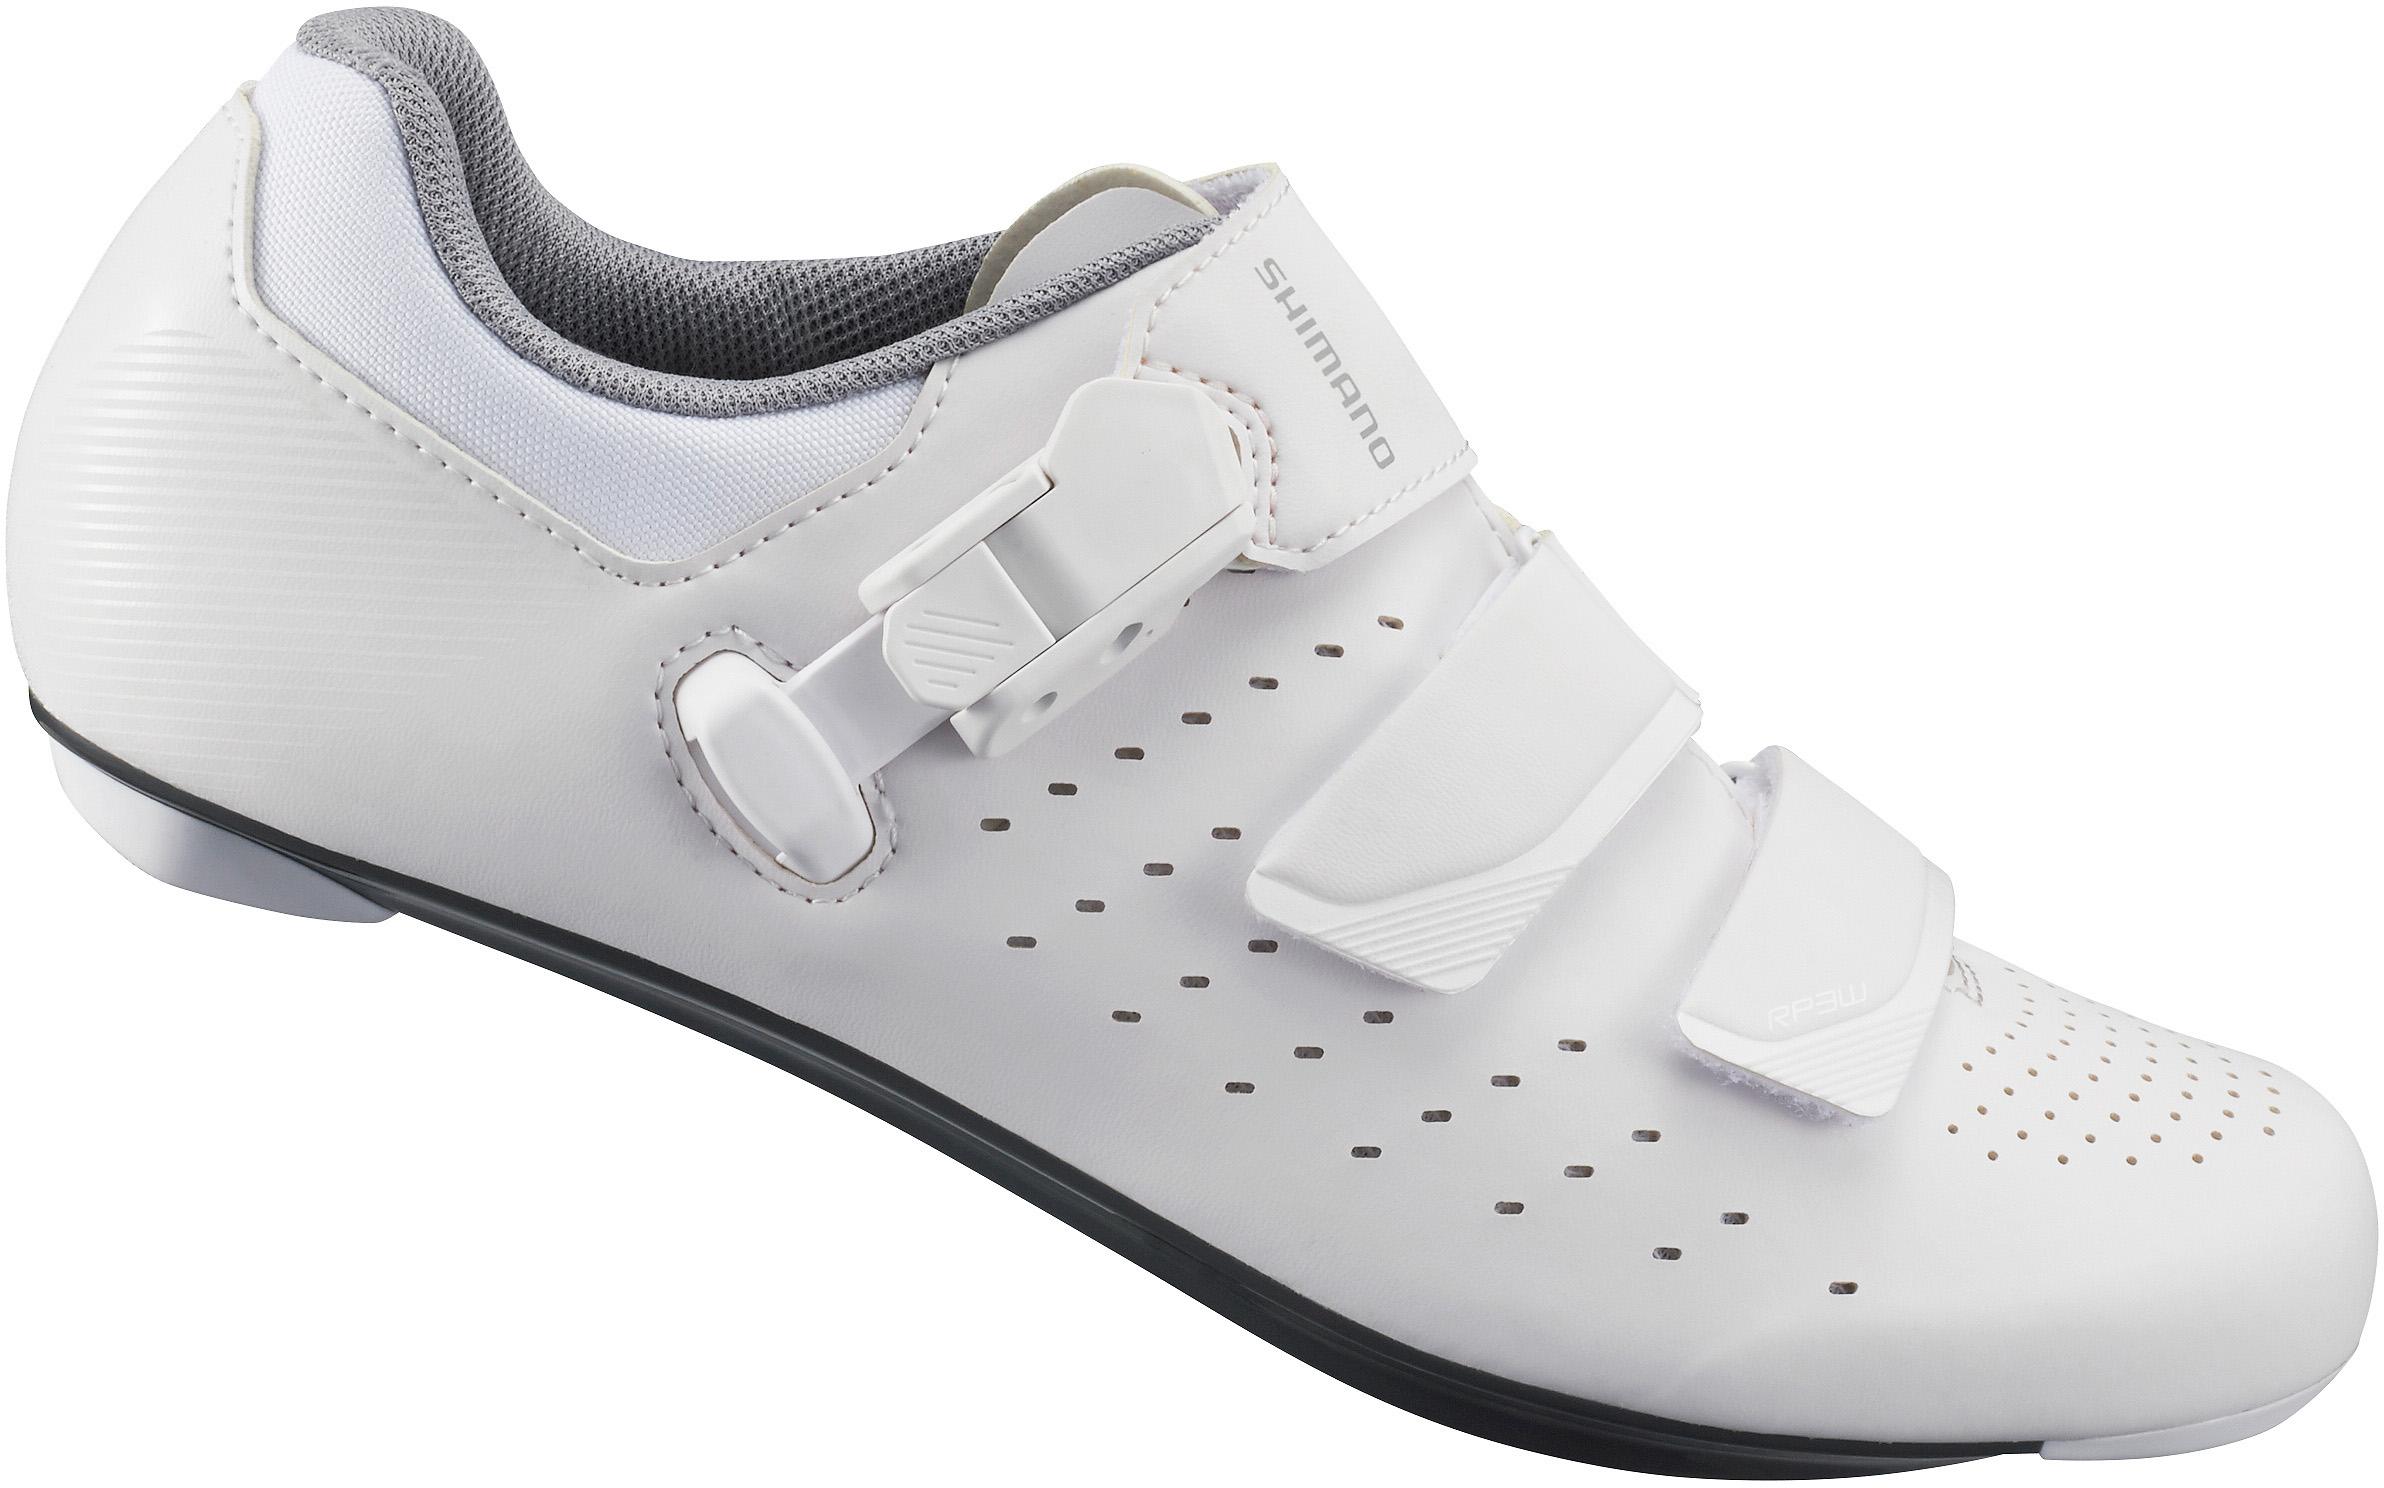 Rp3W (Rp301W) Spd-Sl Womens Shoes, White, Size 35